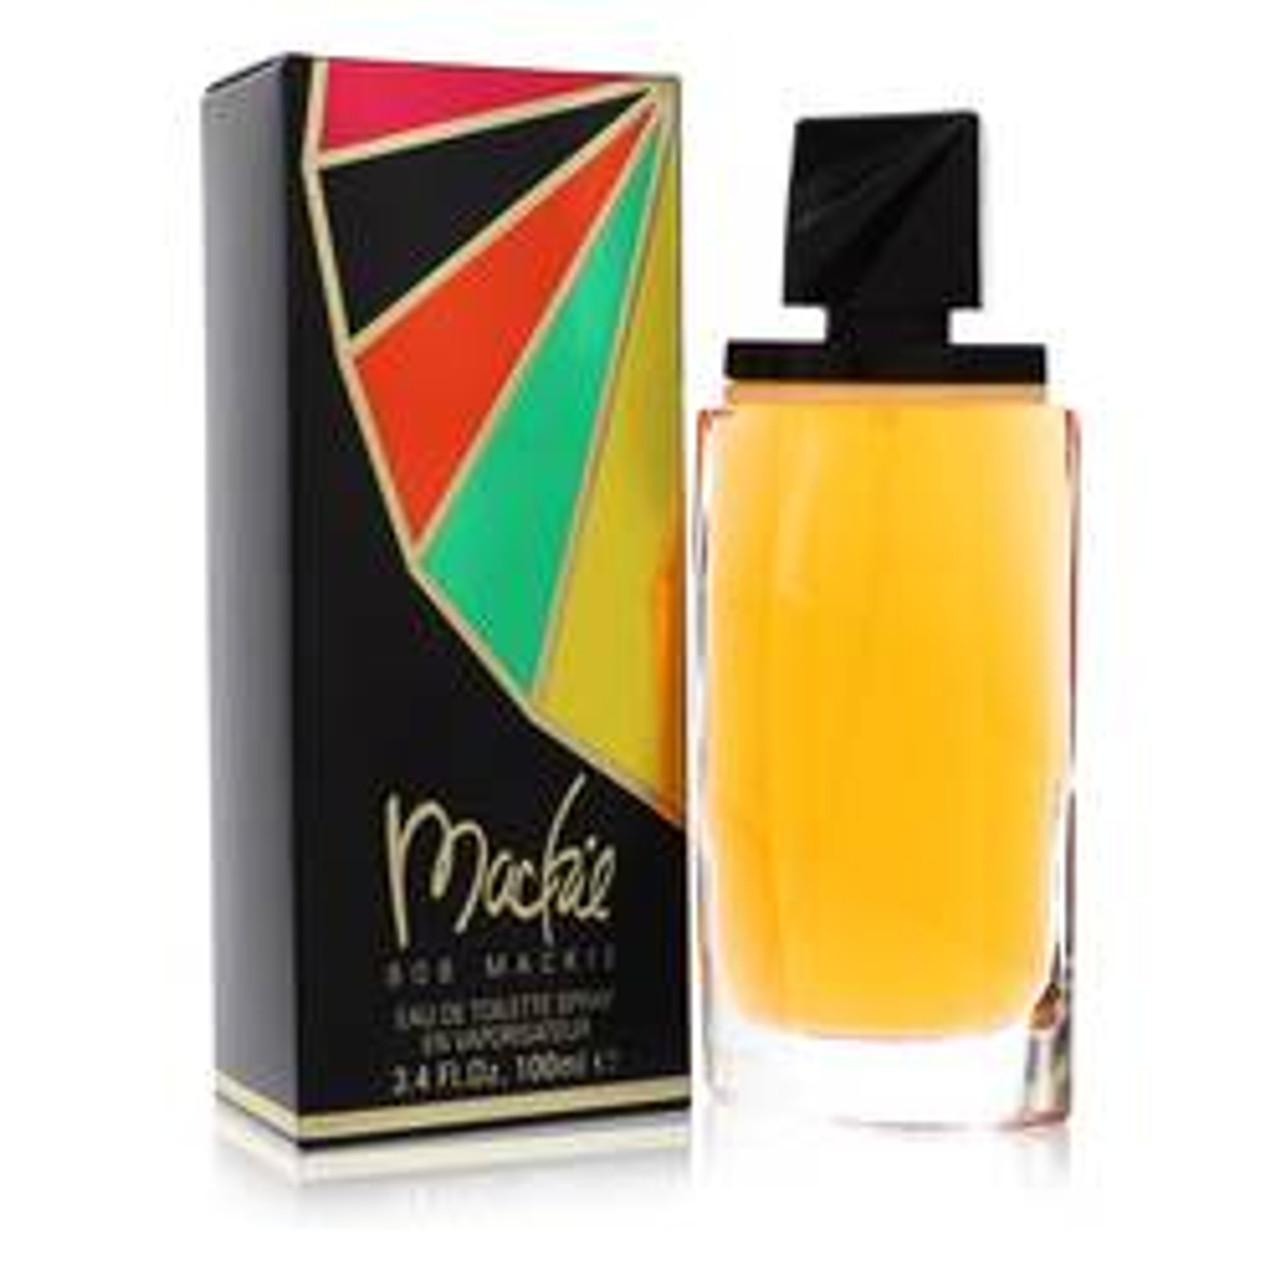 Mackie Perfume By Bob Mackie Eau De Toilette Spray 3.4 oz for Women - [From 59.00 - Choose pk Qty ] - *Ships from Miami